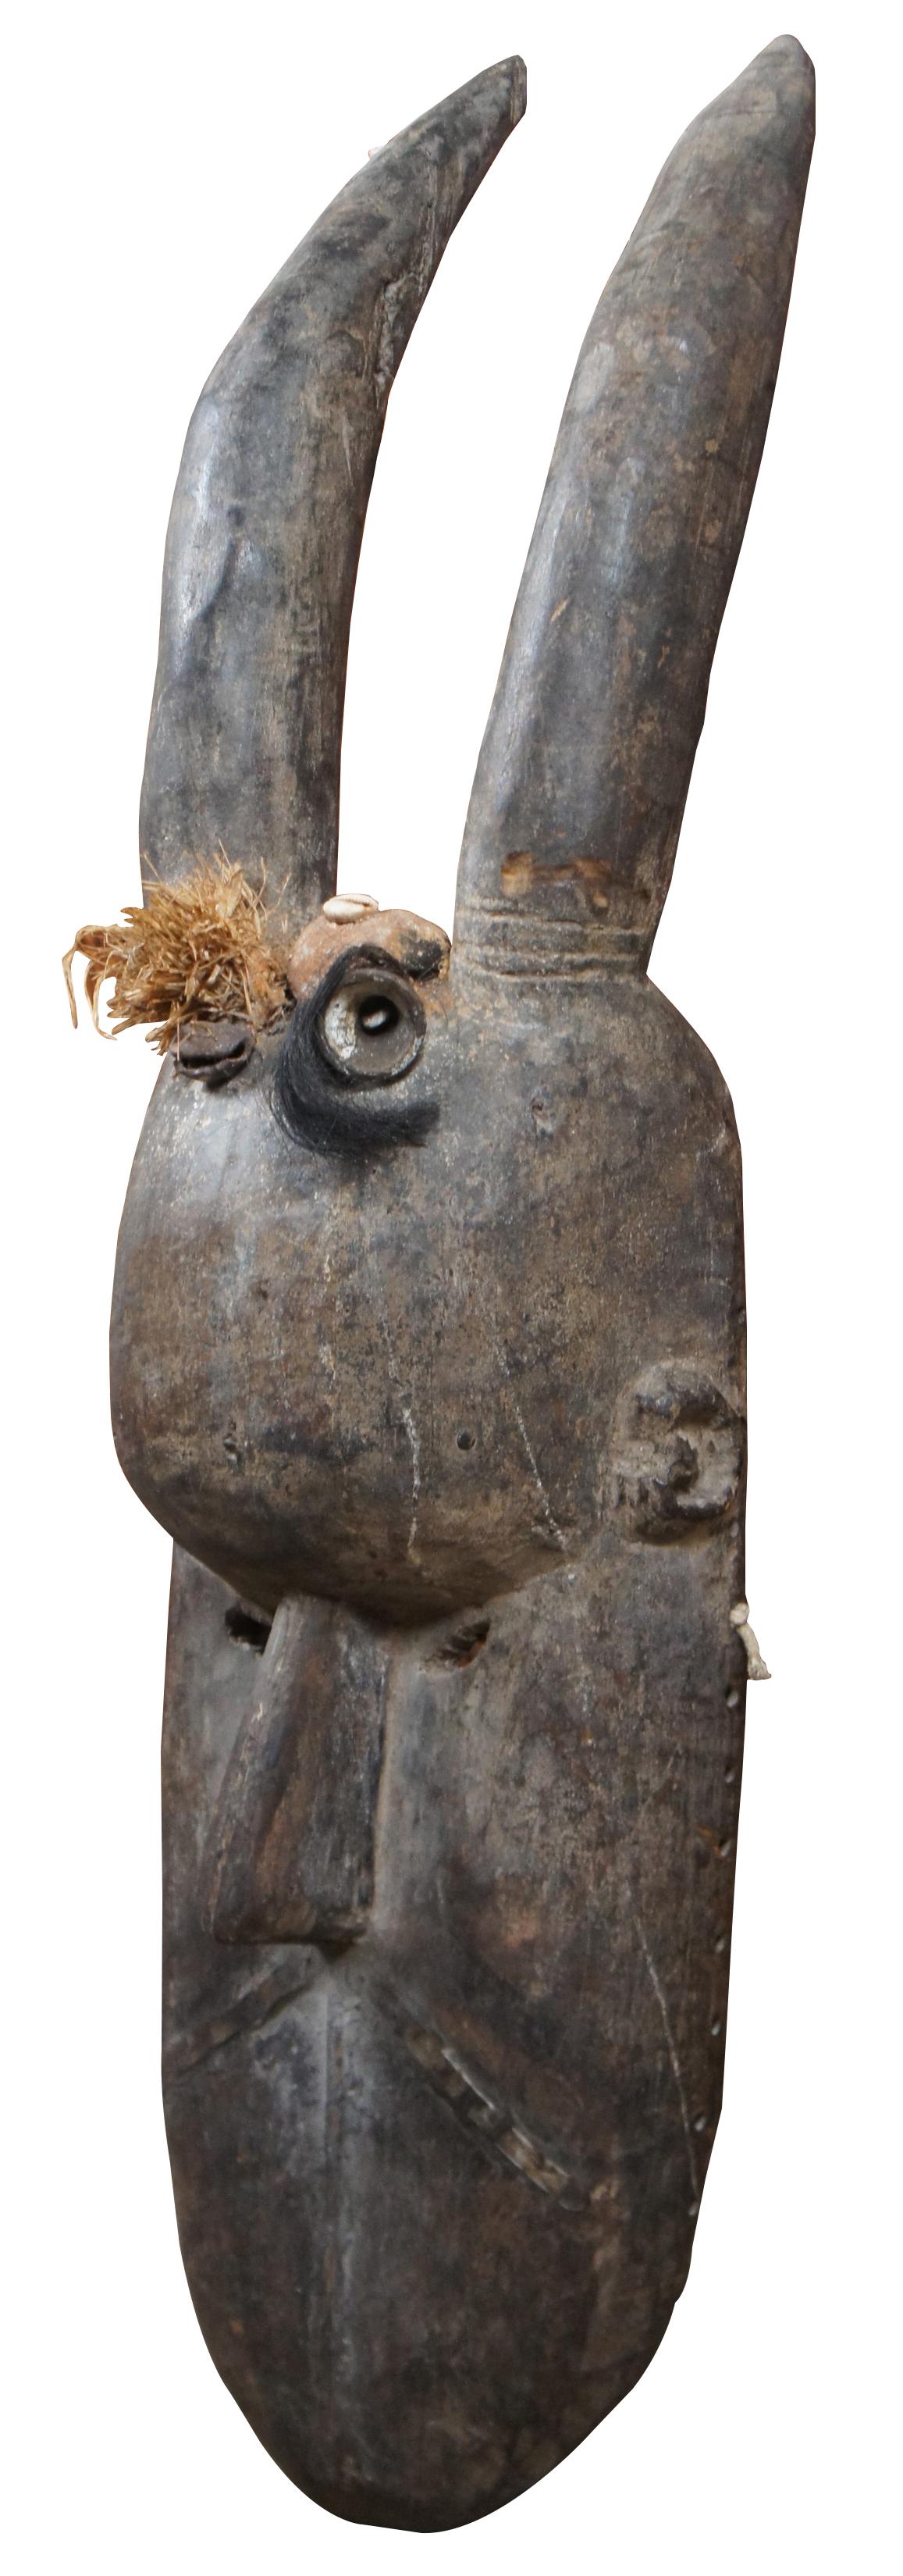 Antica maschera Toma o Landai scolpita a mano proveniente dalla Guinea, in Africa. 